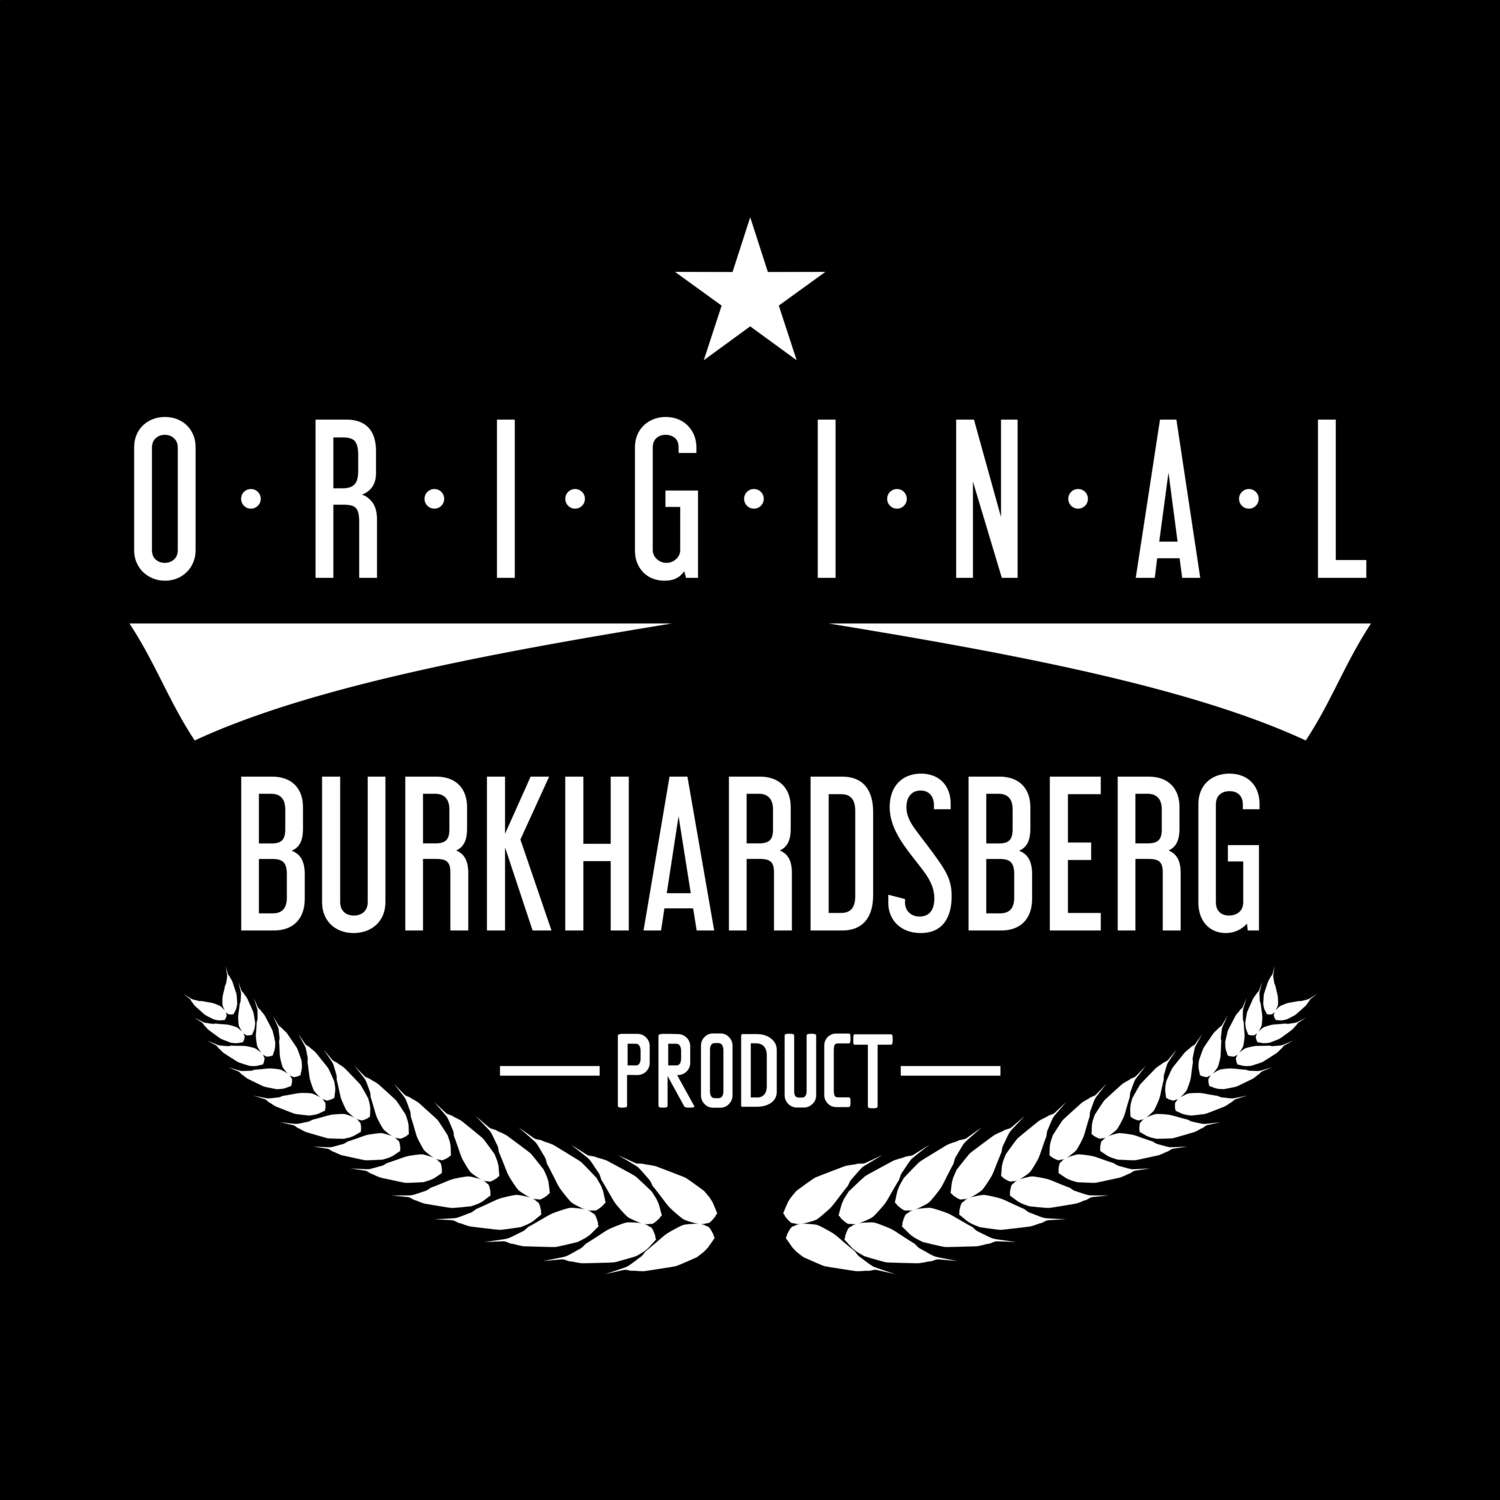 Burkhardsberg T-Shirt »Original Product«